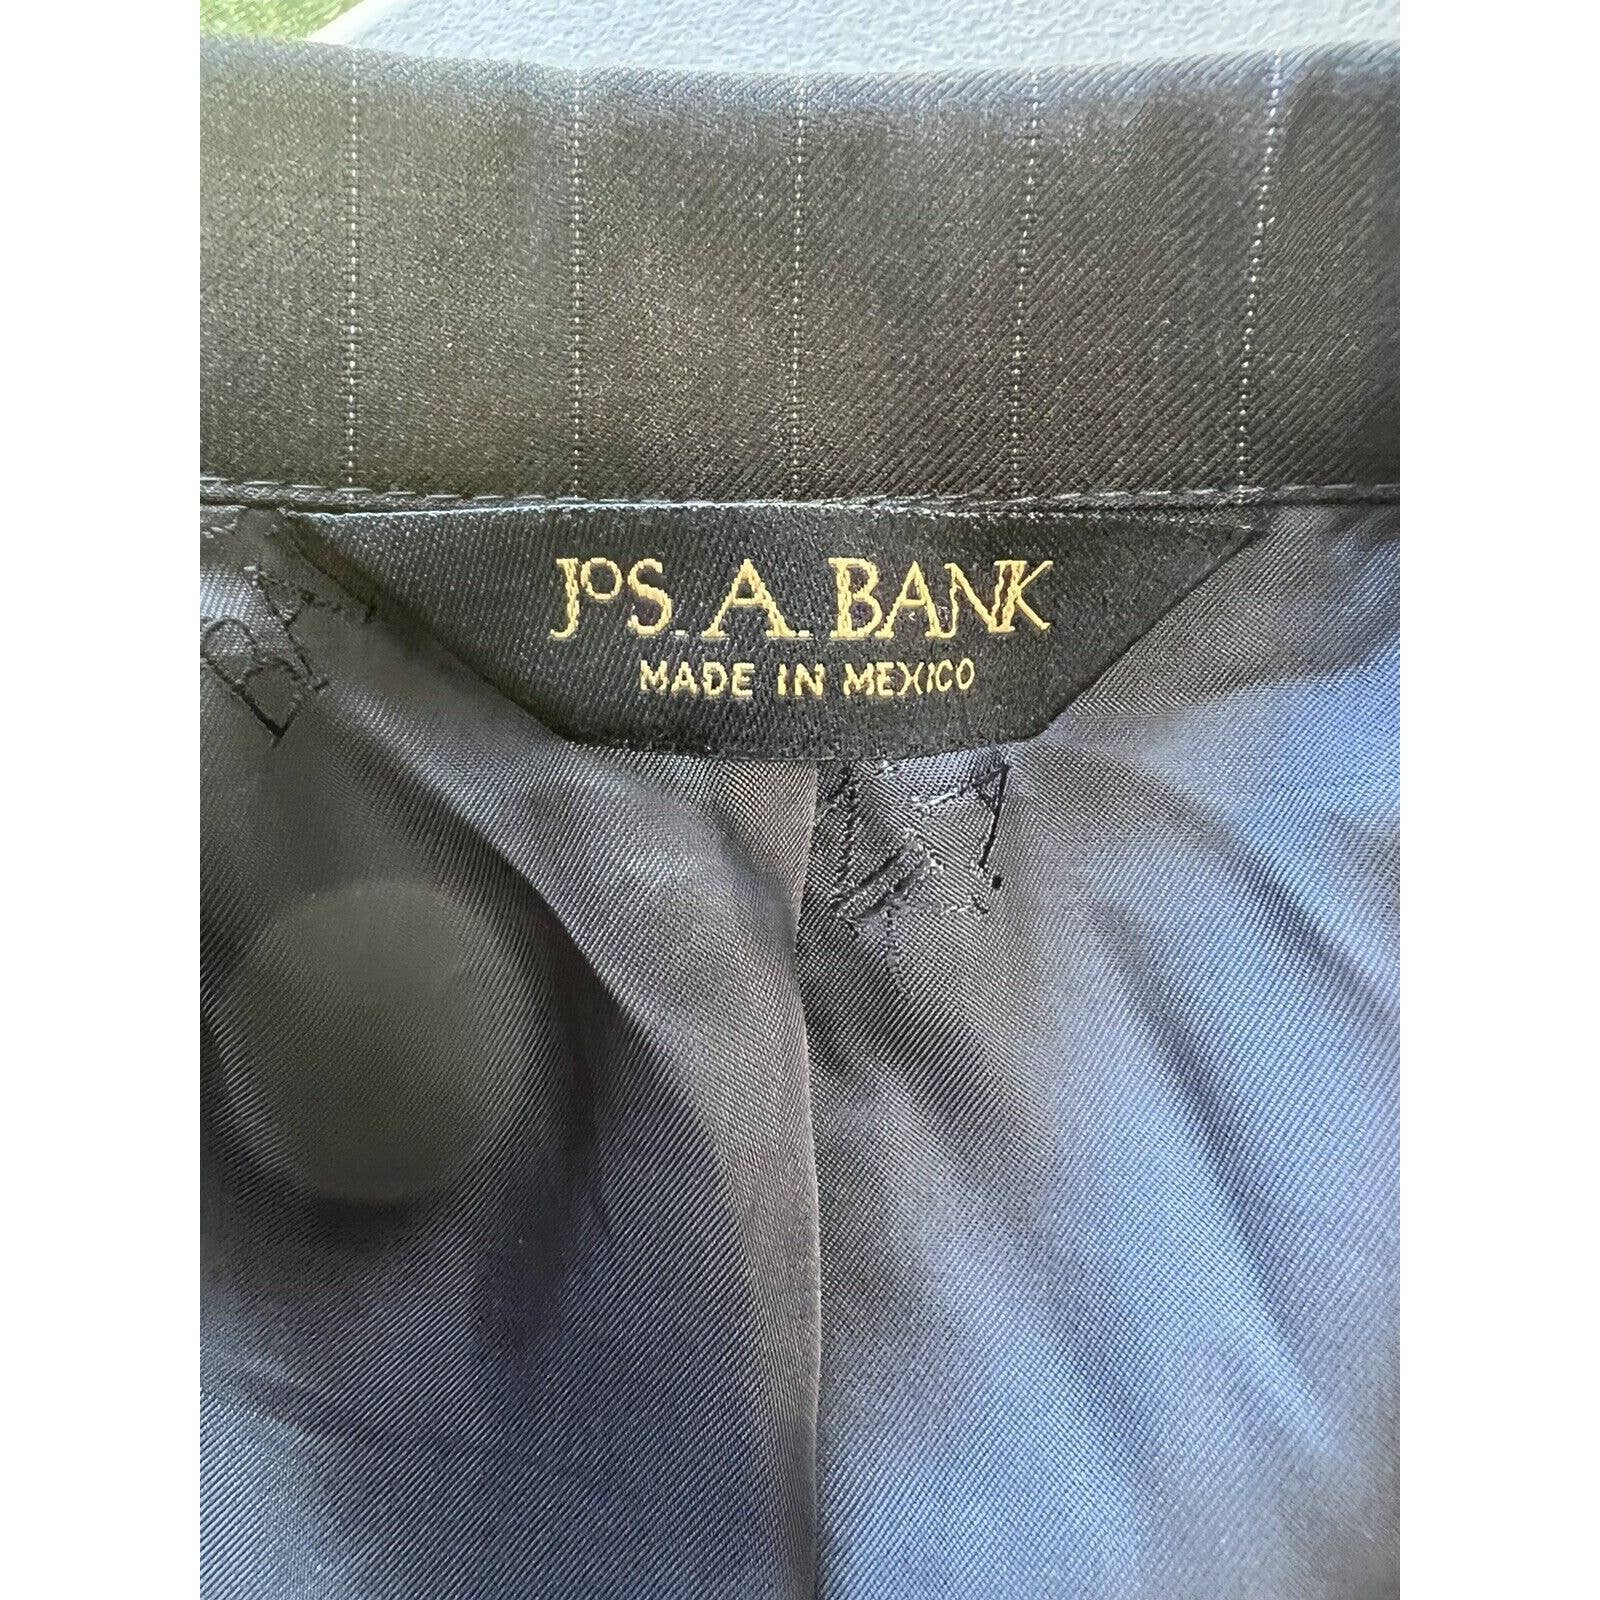 Jos A Bank Signature Gold 2 Button Suit Jacket Men’s 43R Wool Black Pinstripe